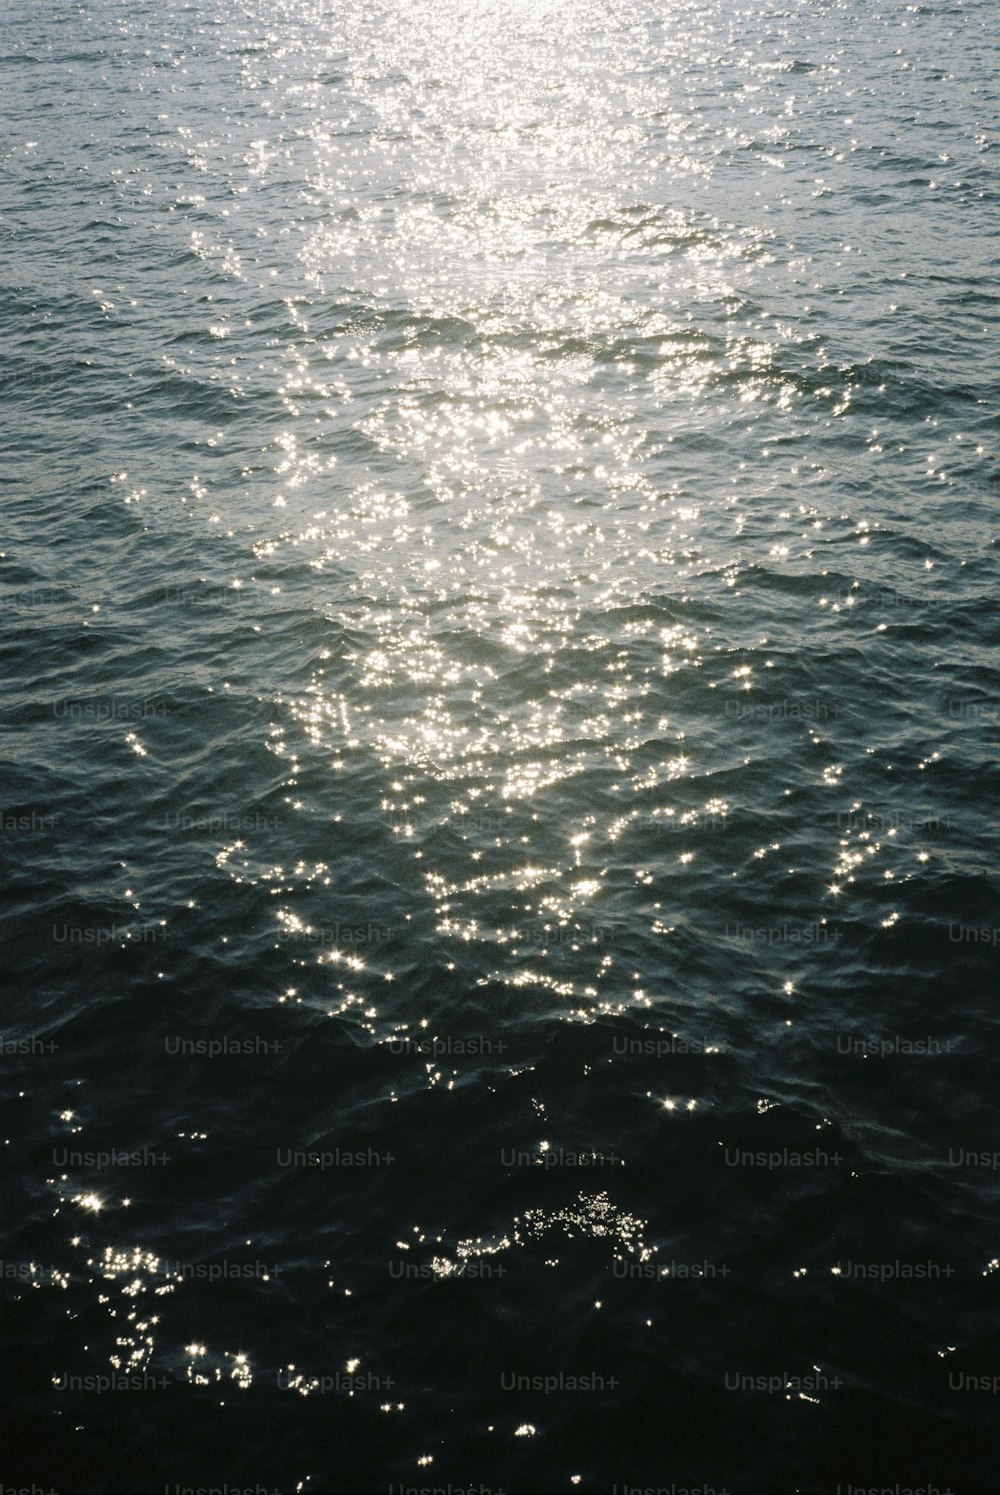 El sol brilla intensamente sobre el agua